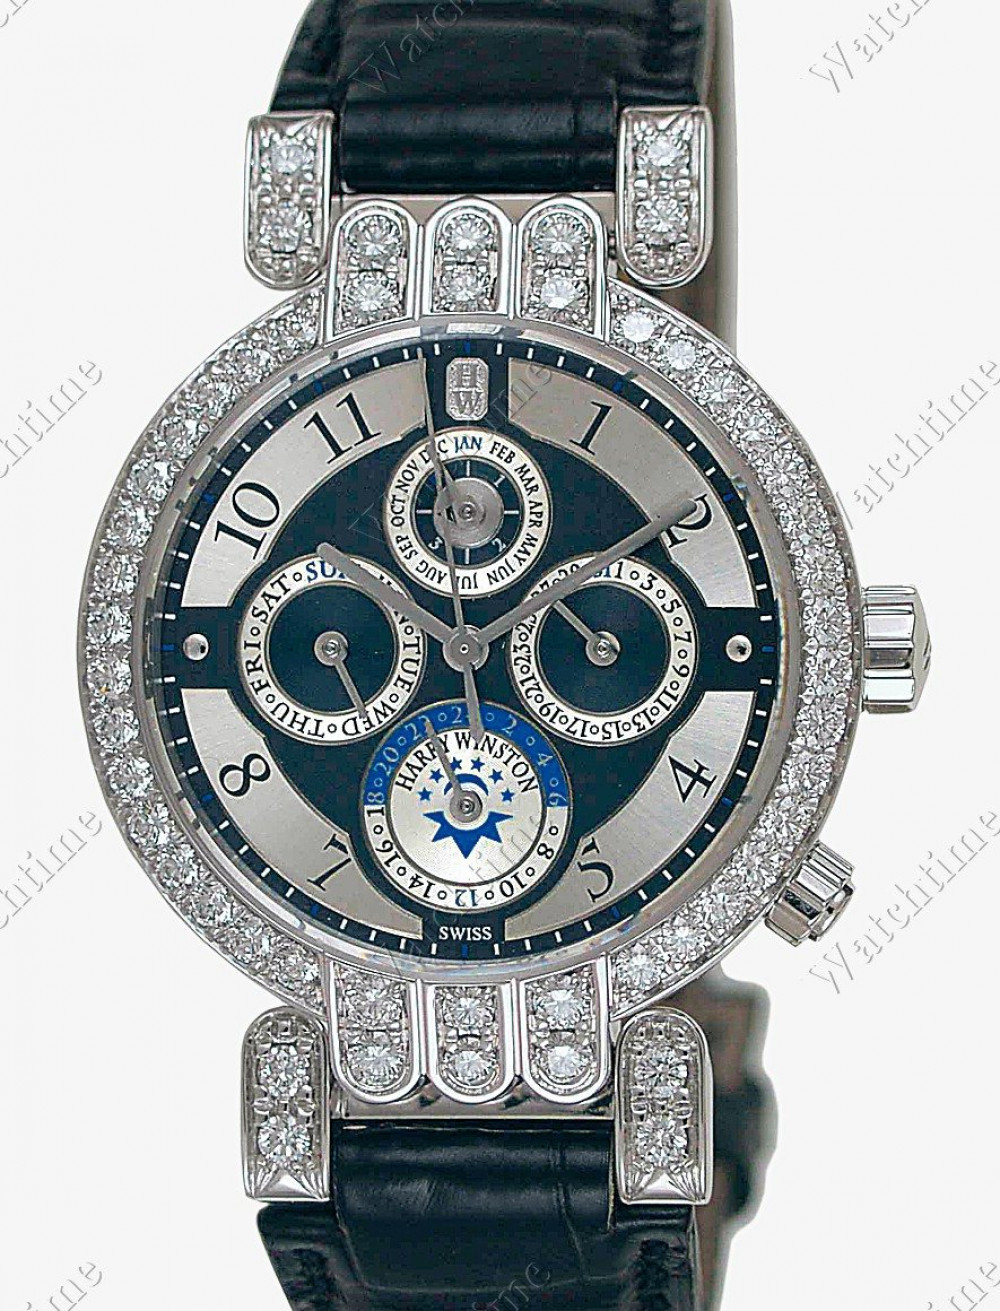 Zegarek firmy Harry Winston, model Timezone Perpetual Calendrier